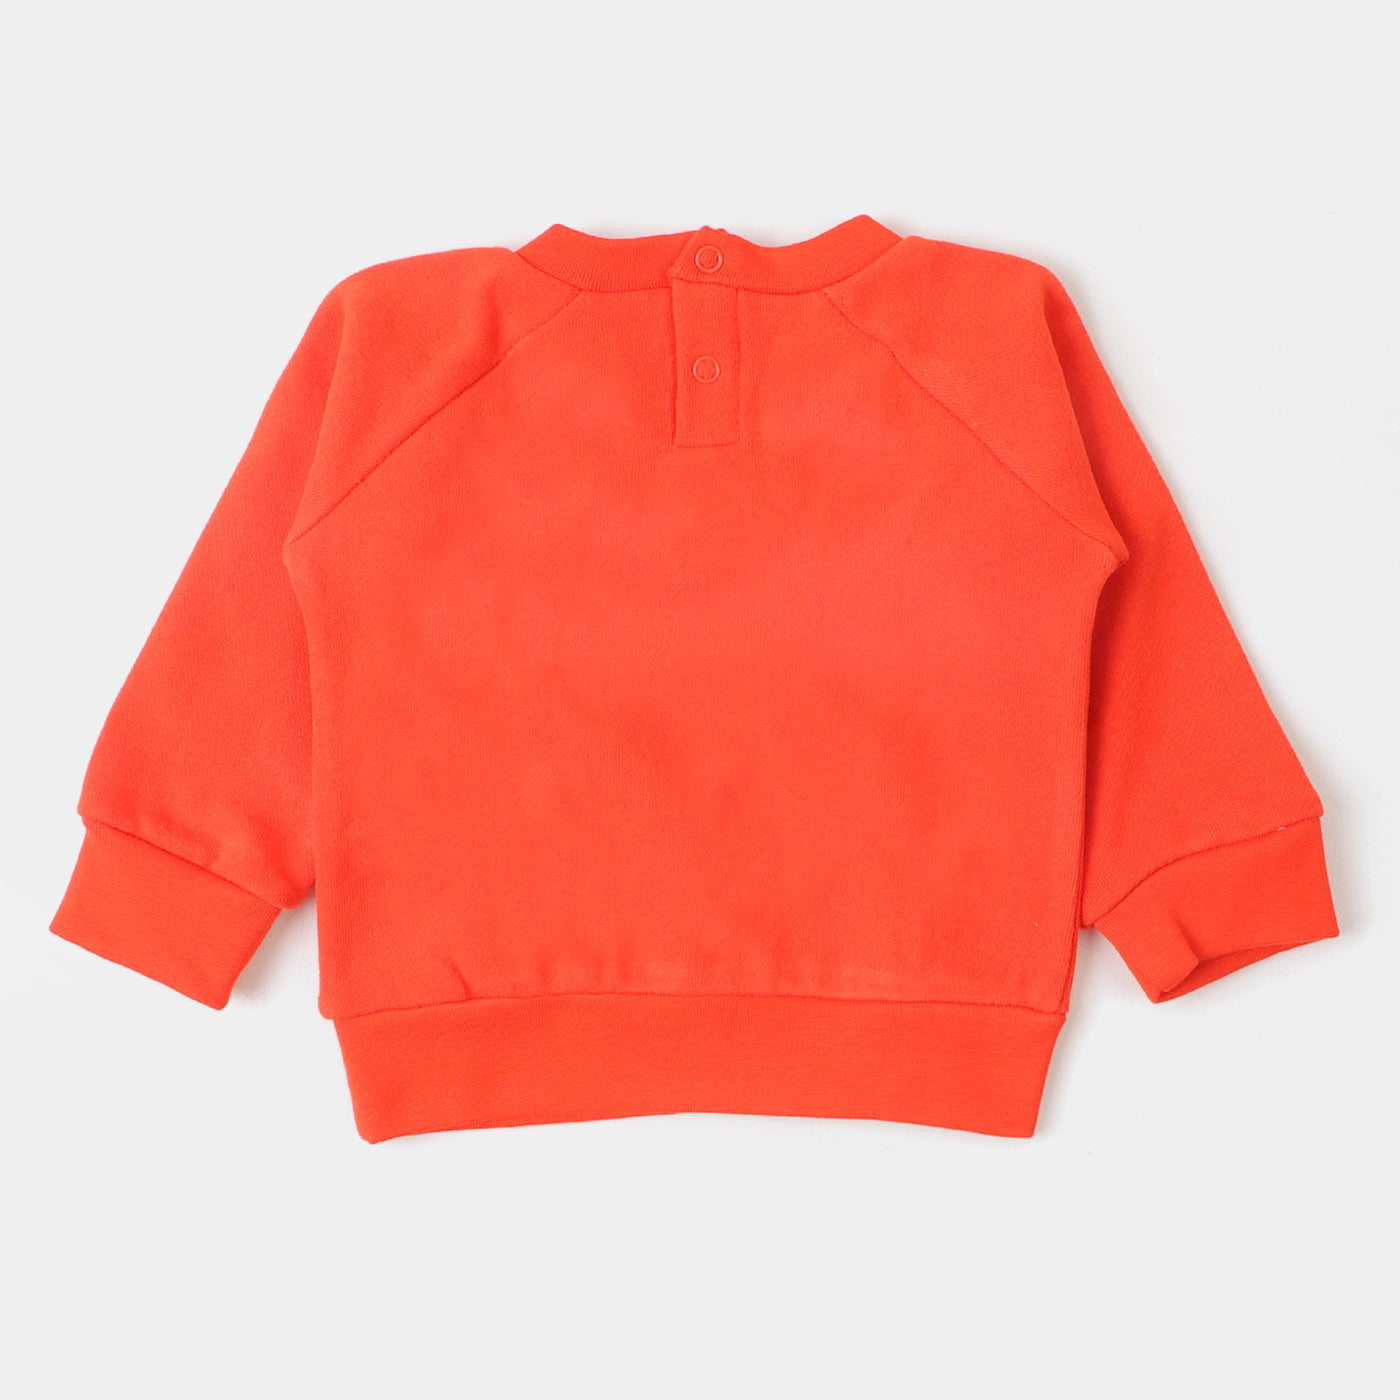 Infant Boys Knitted Suit - D.Orange